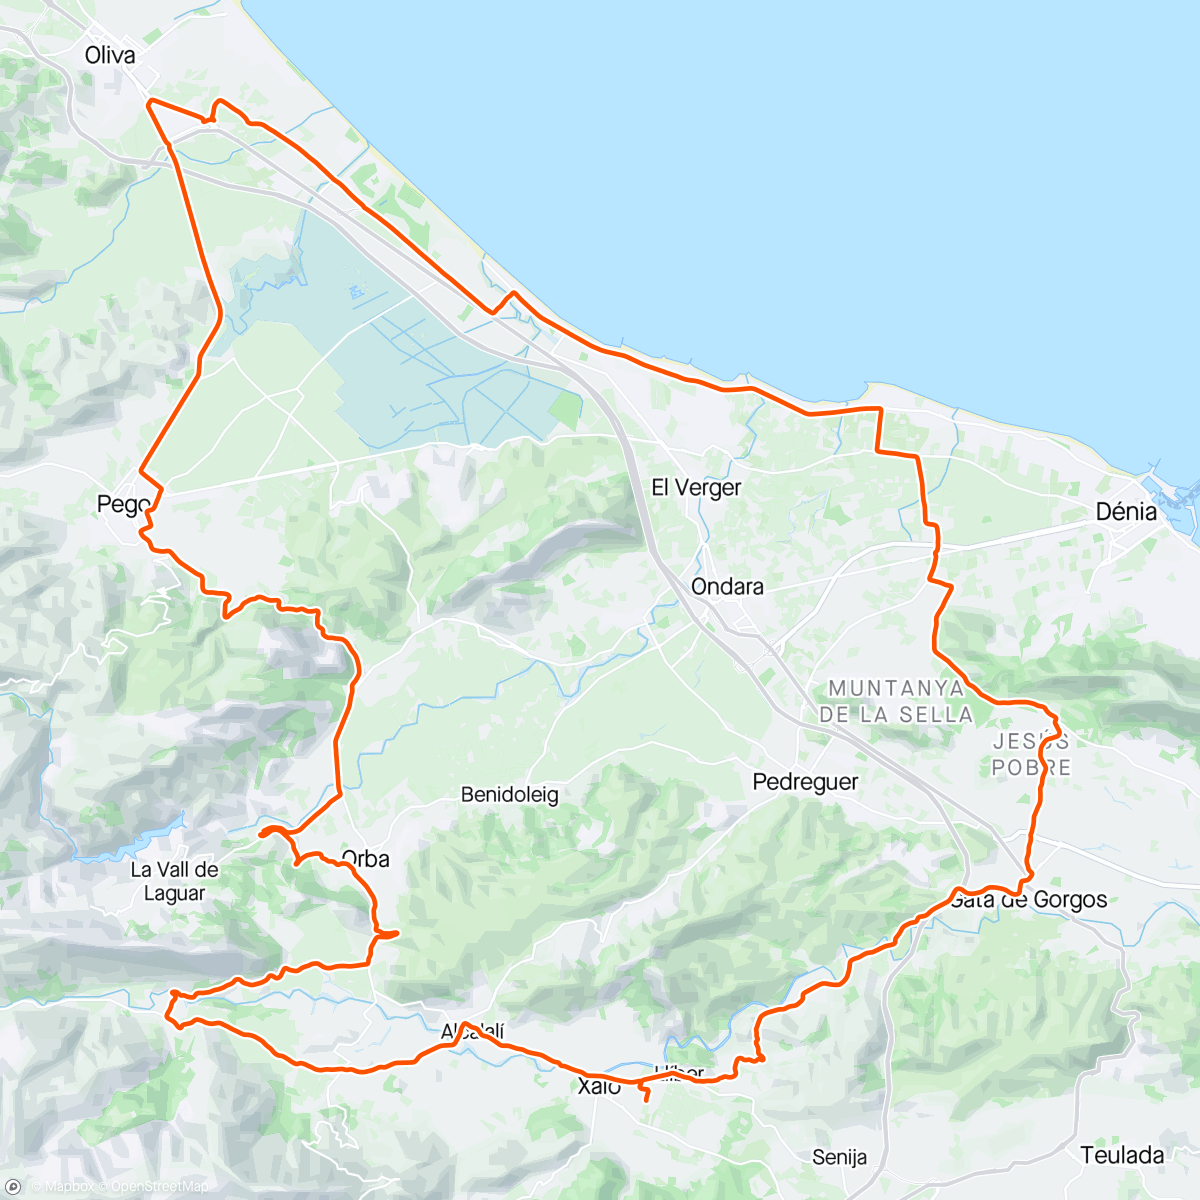 Map of the activity, Benigembla - Orbea - Pego - Oliva - Jesus Pobre - Gata de Gorgos